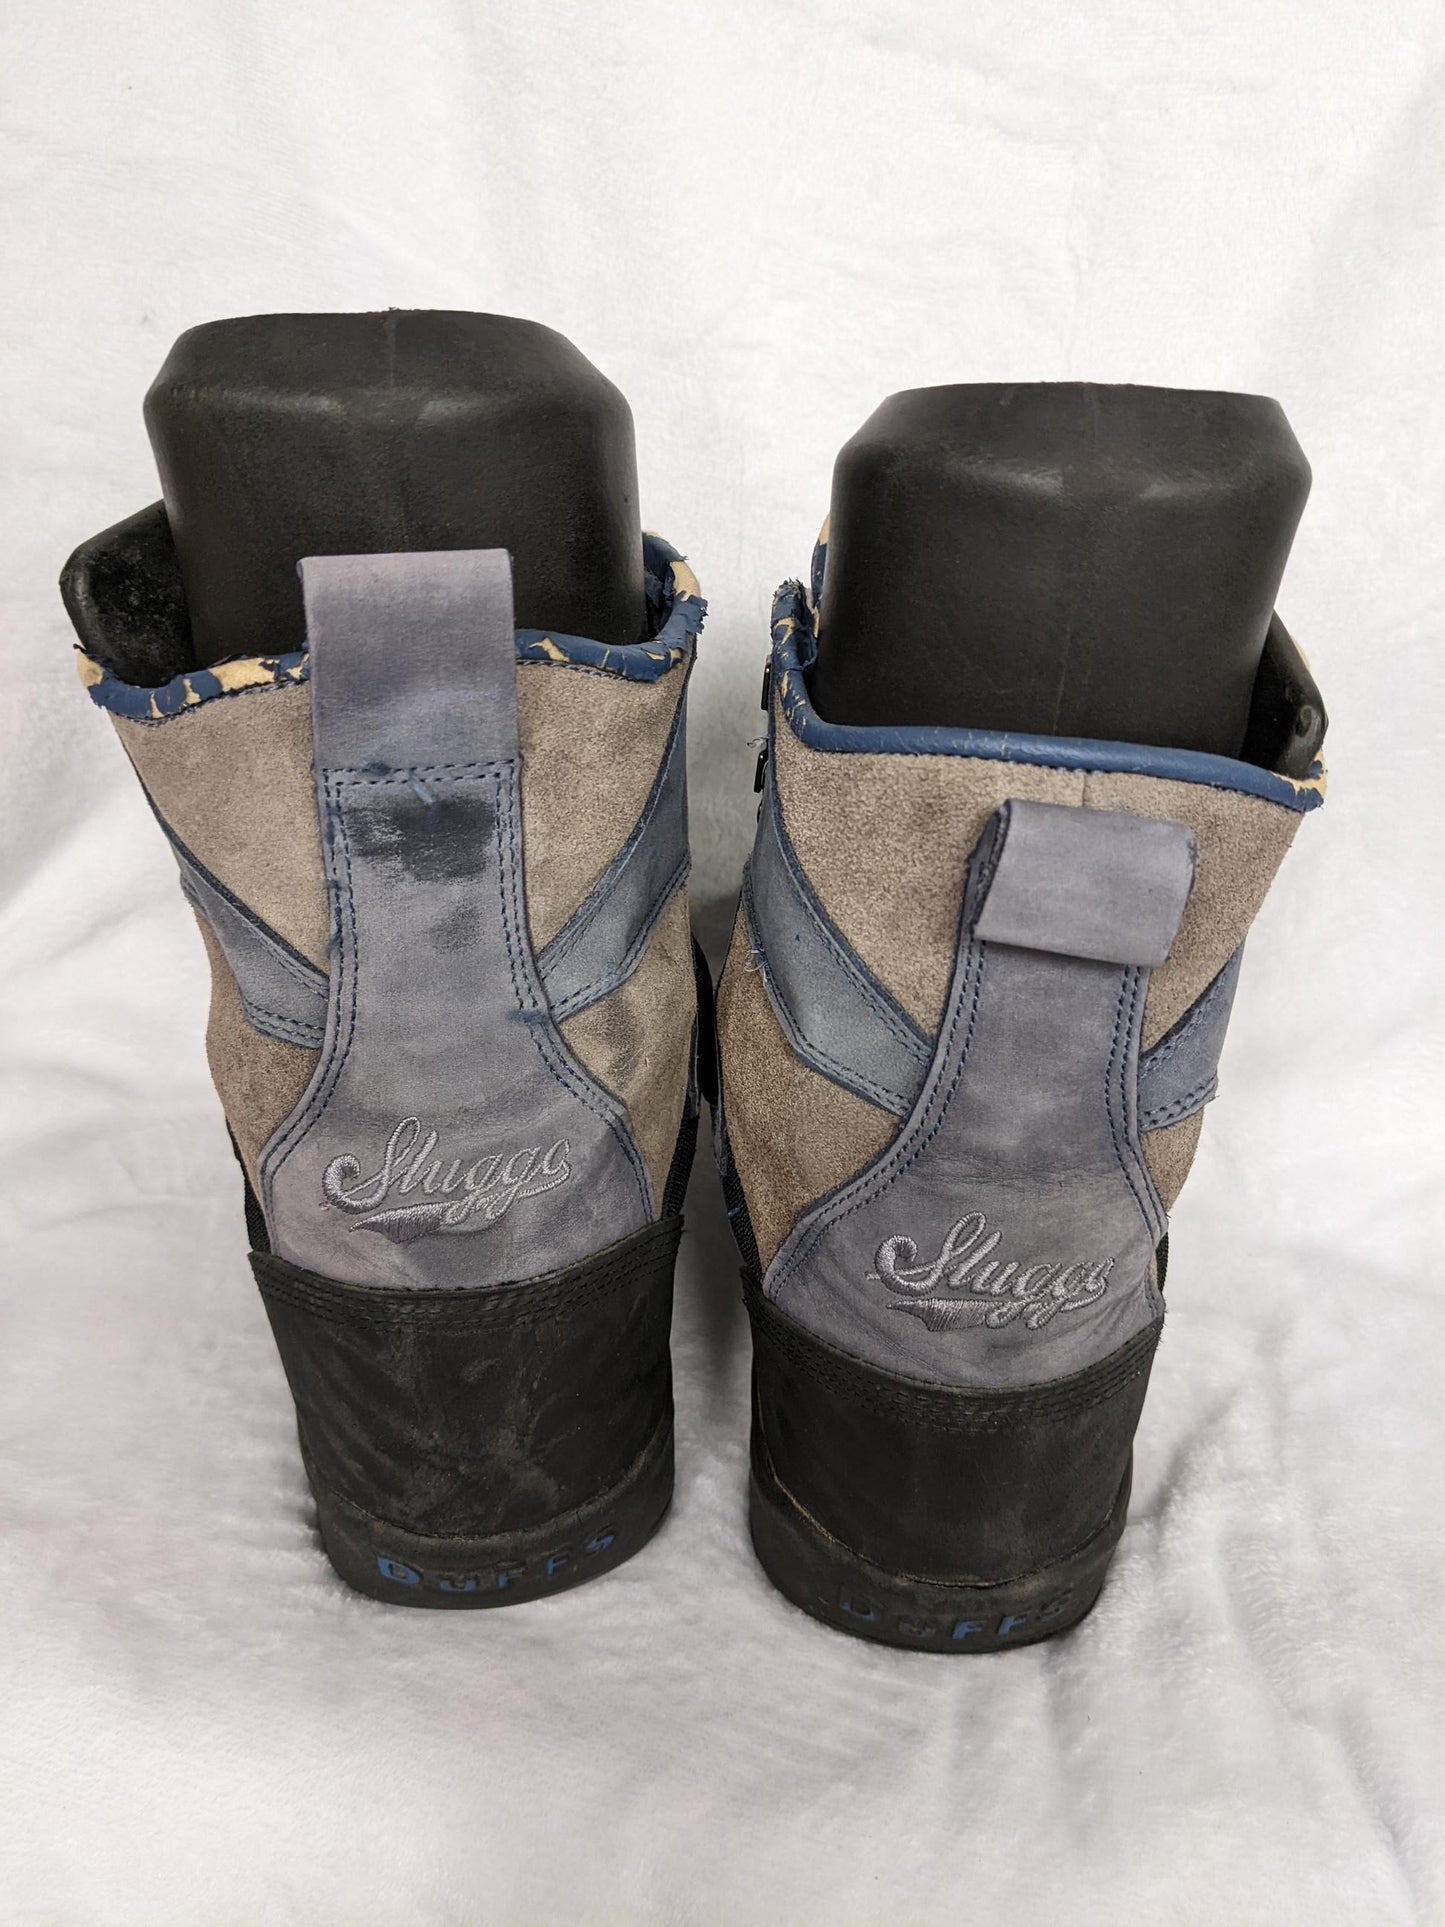 Sluggo Duffs Board Boots Snowboard Boots Size 6 men's/ 7.5 Women's Blue Used